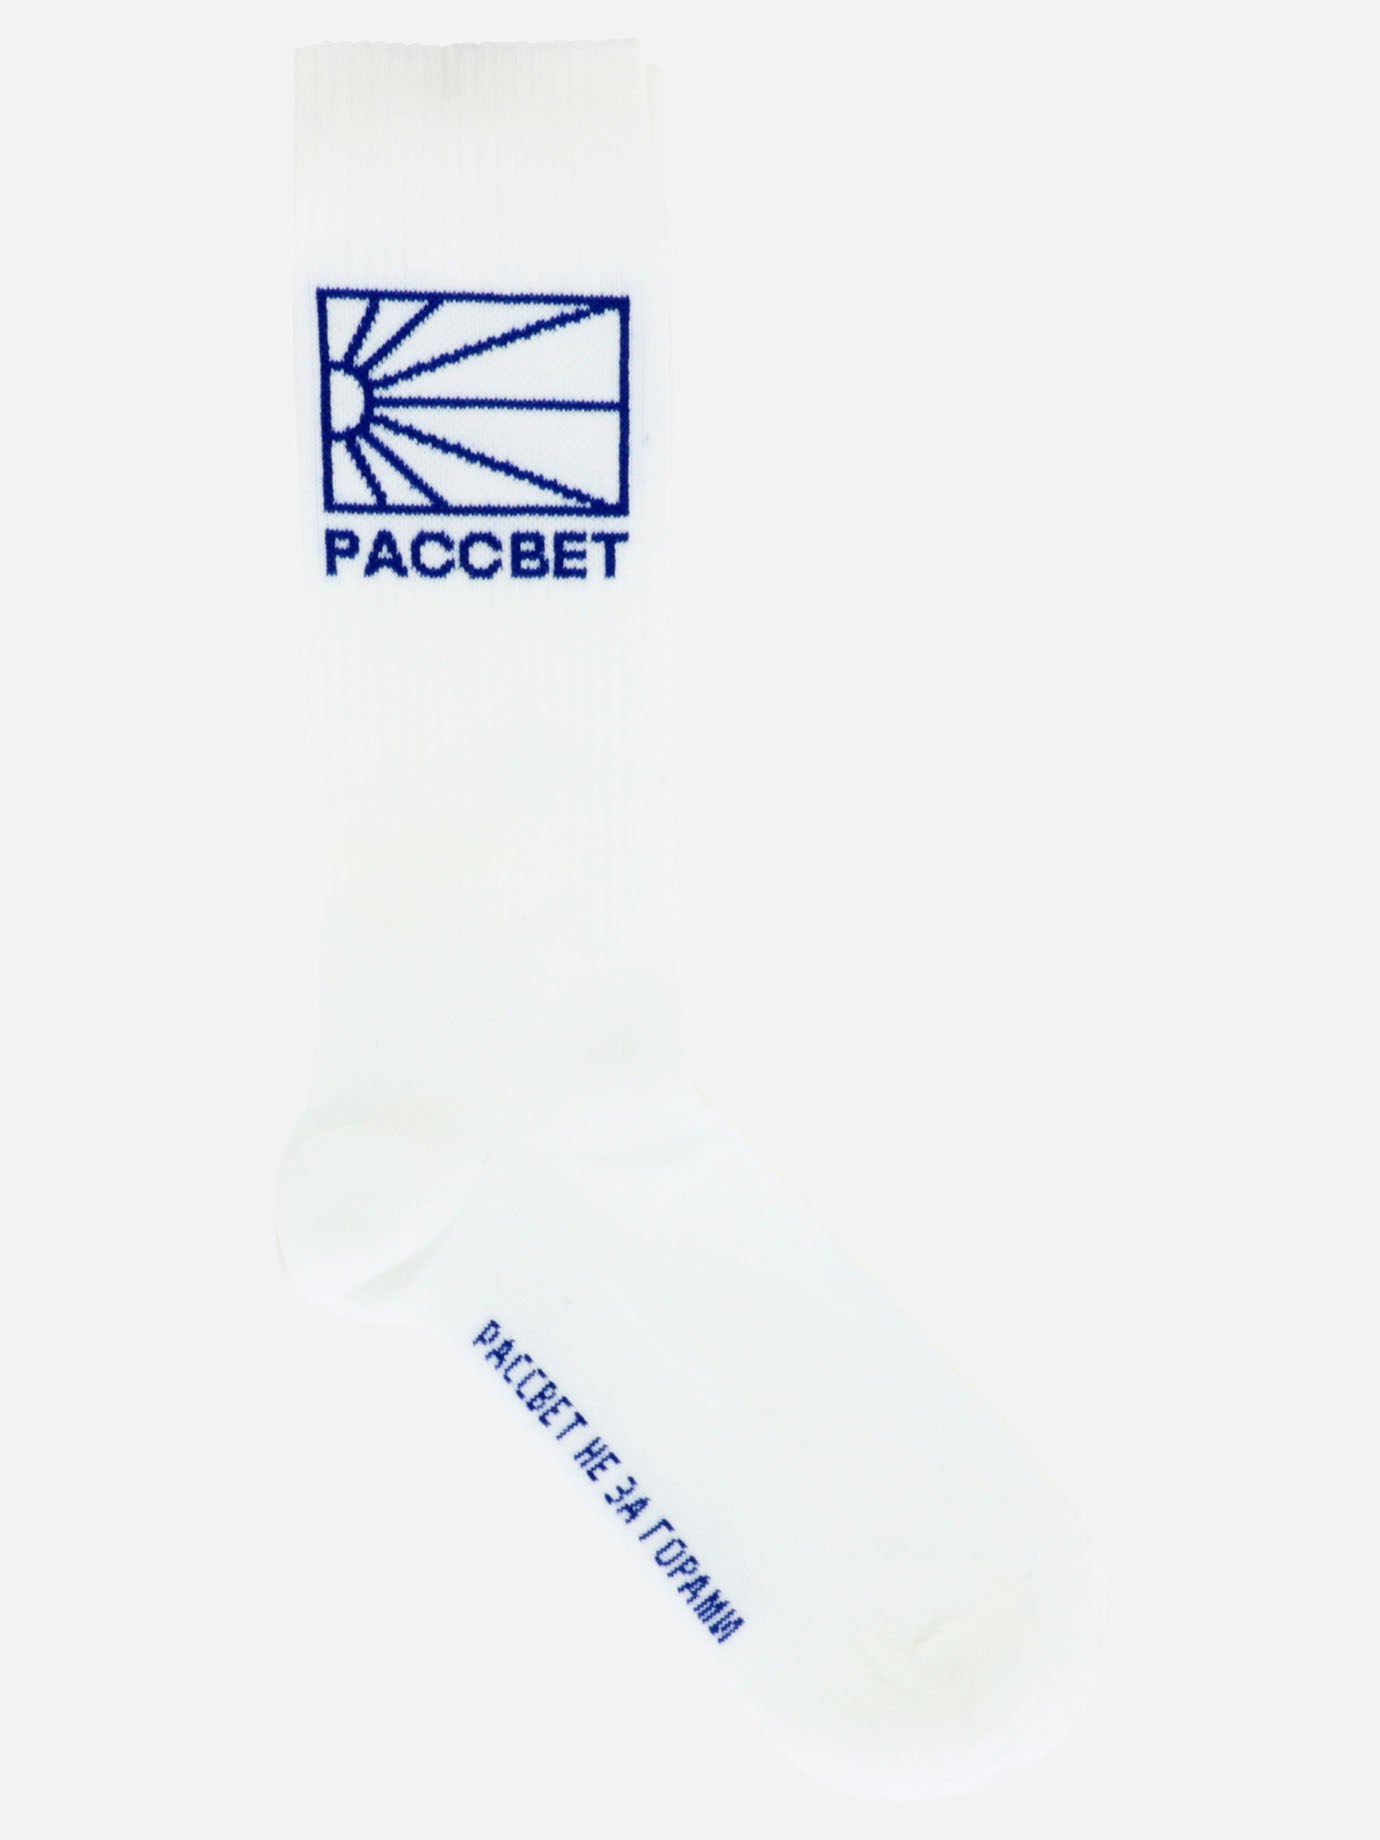  Logo 1  socksby Paccbet - 1